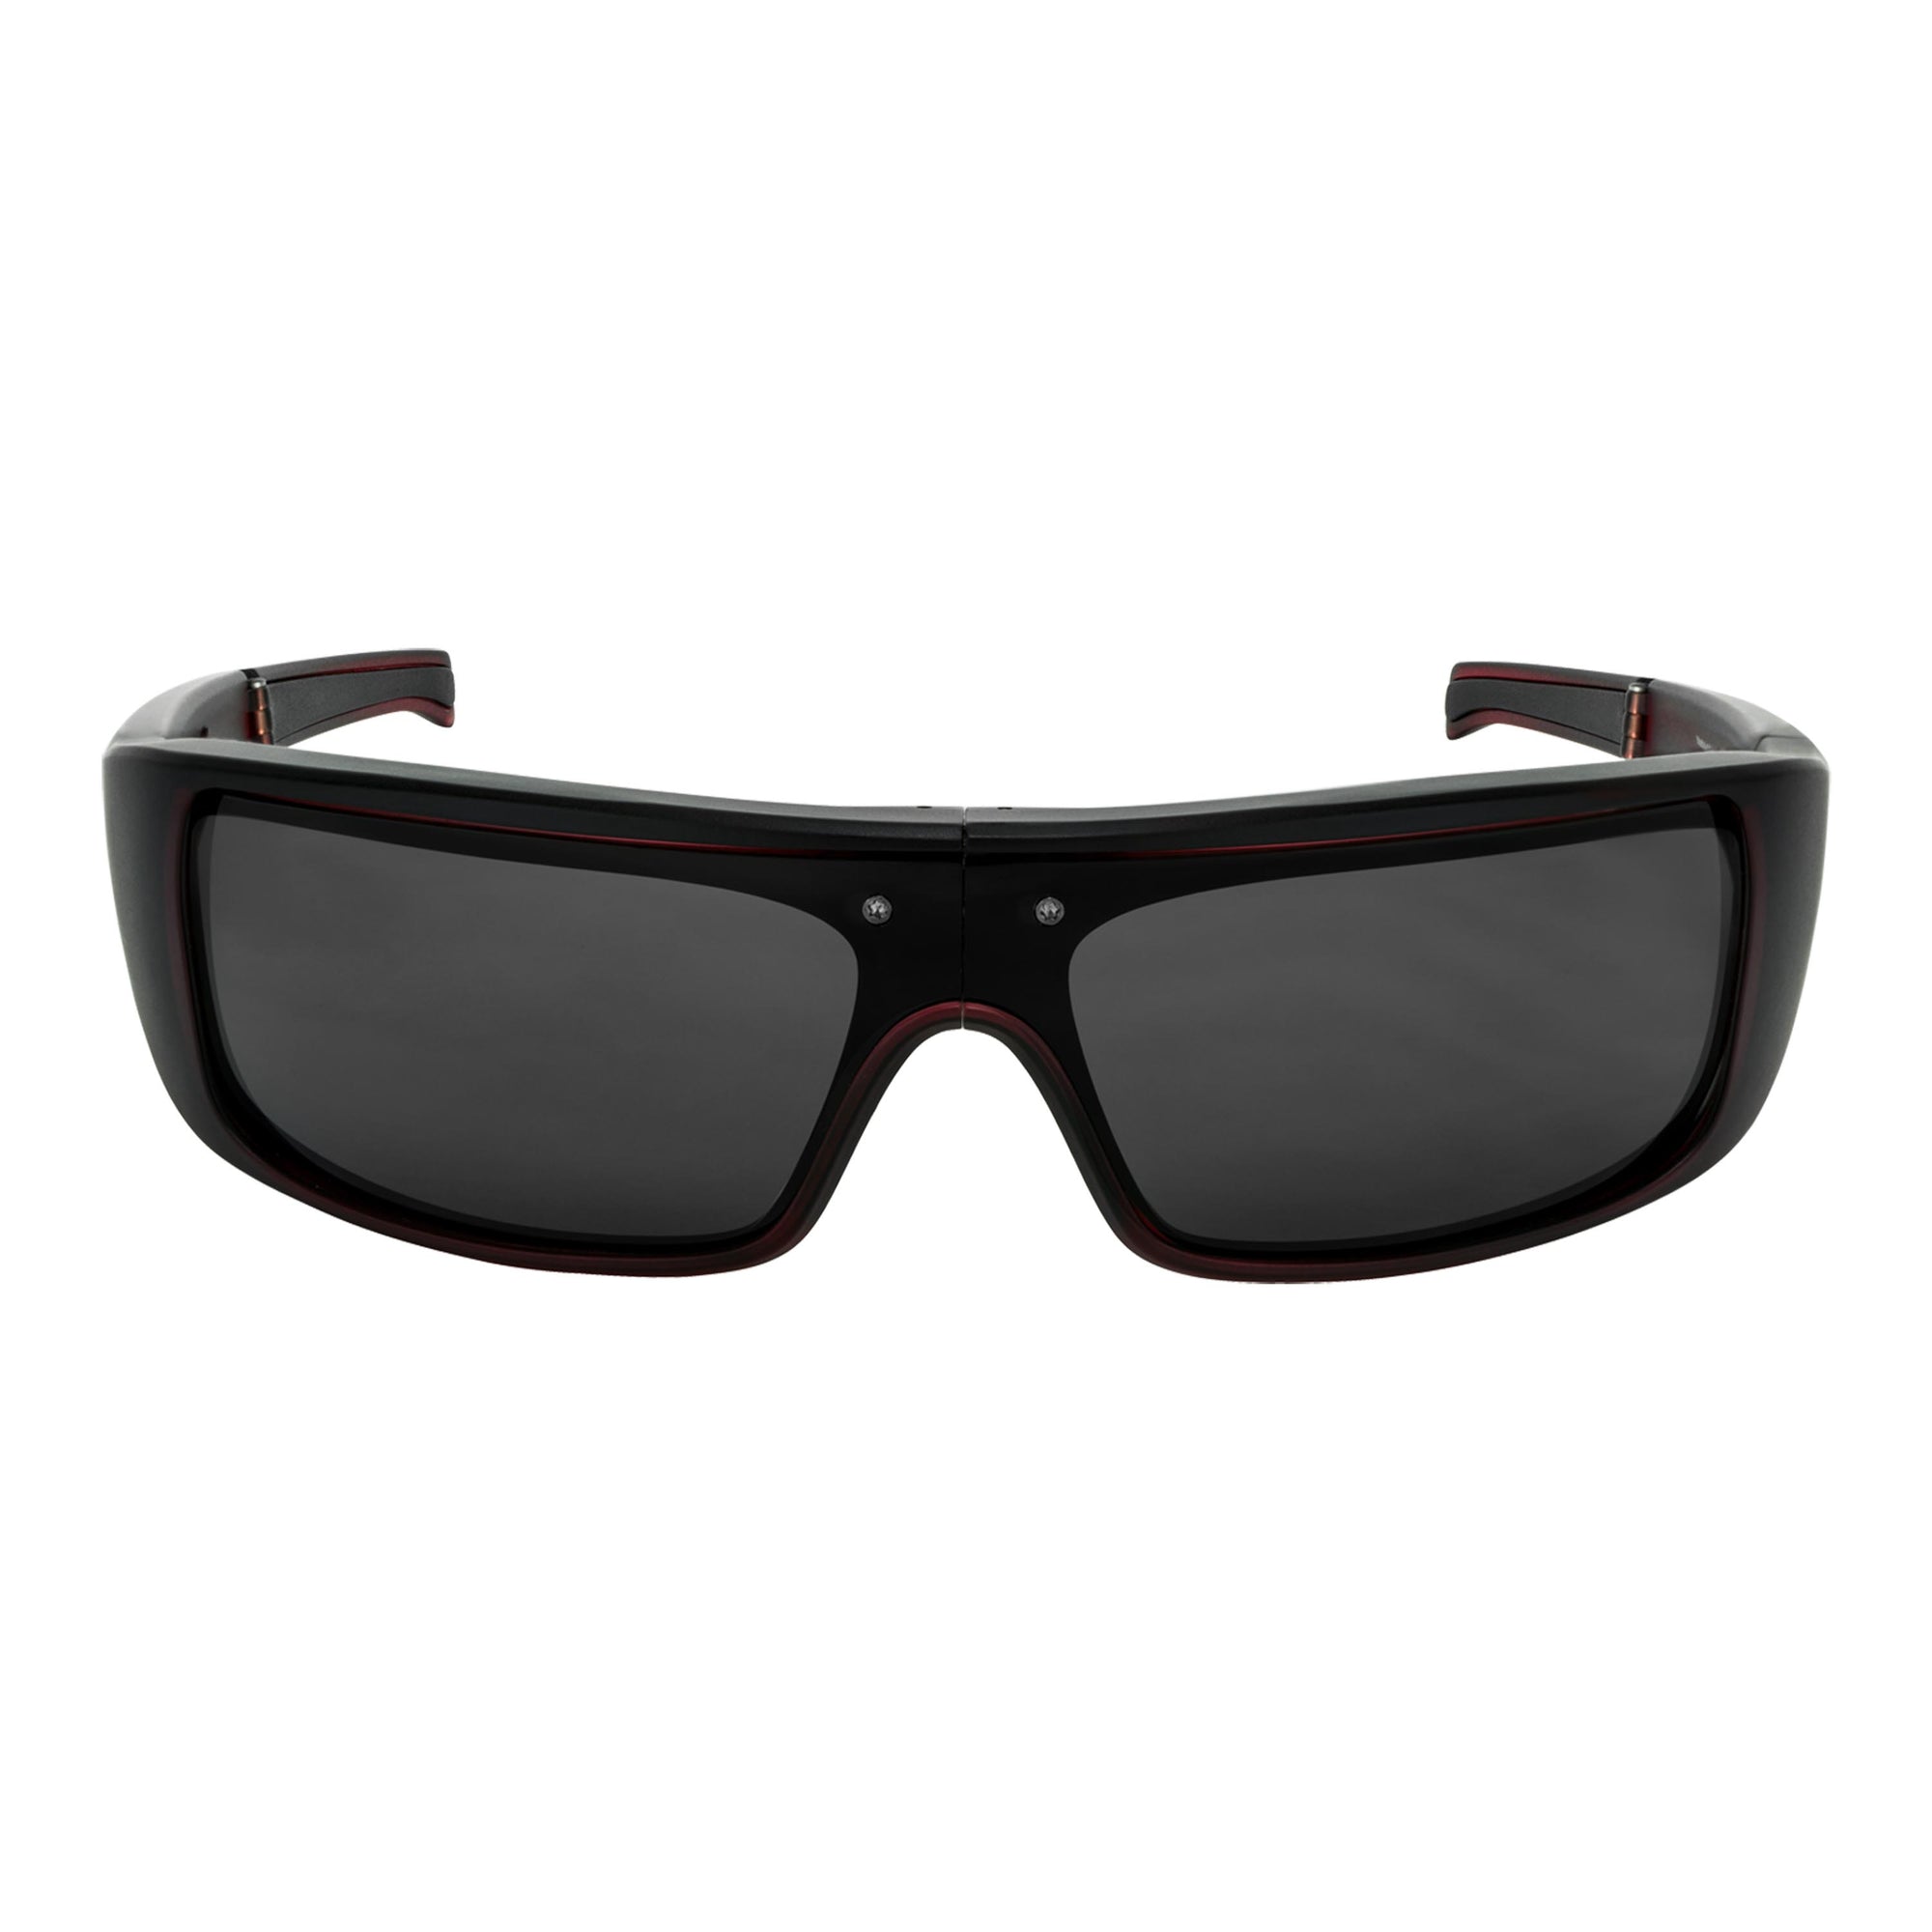 Popticals, Premium Compact Sunglasses, PopGear, 030050-LEGP, Polarized Sunglasses, Gloss Wine/Black Crystal Frame, Gray Lenses, Glam View